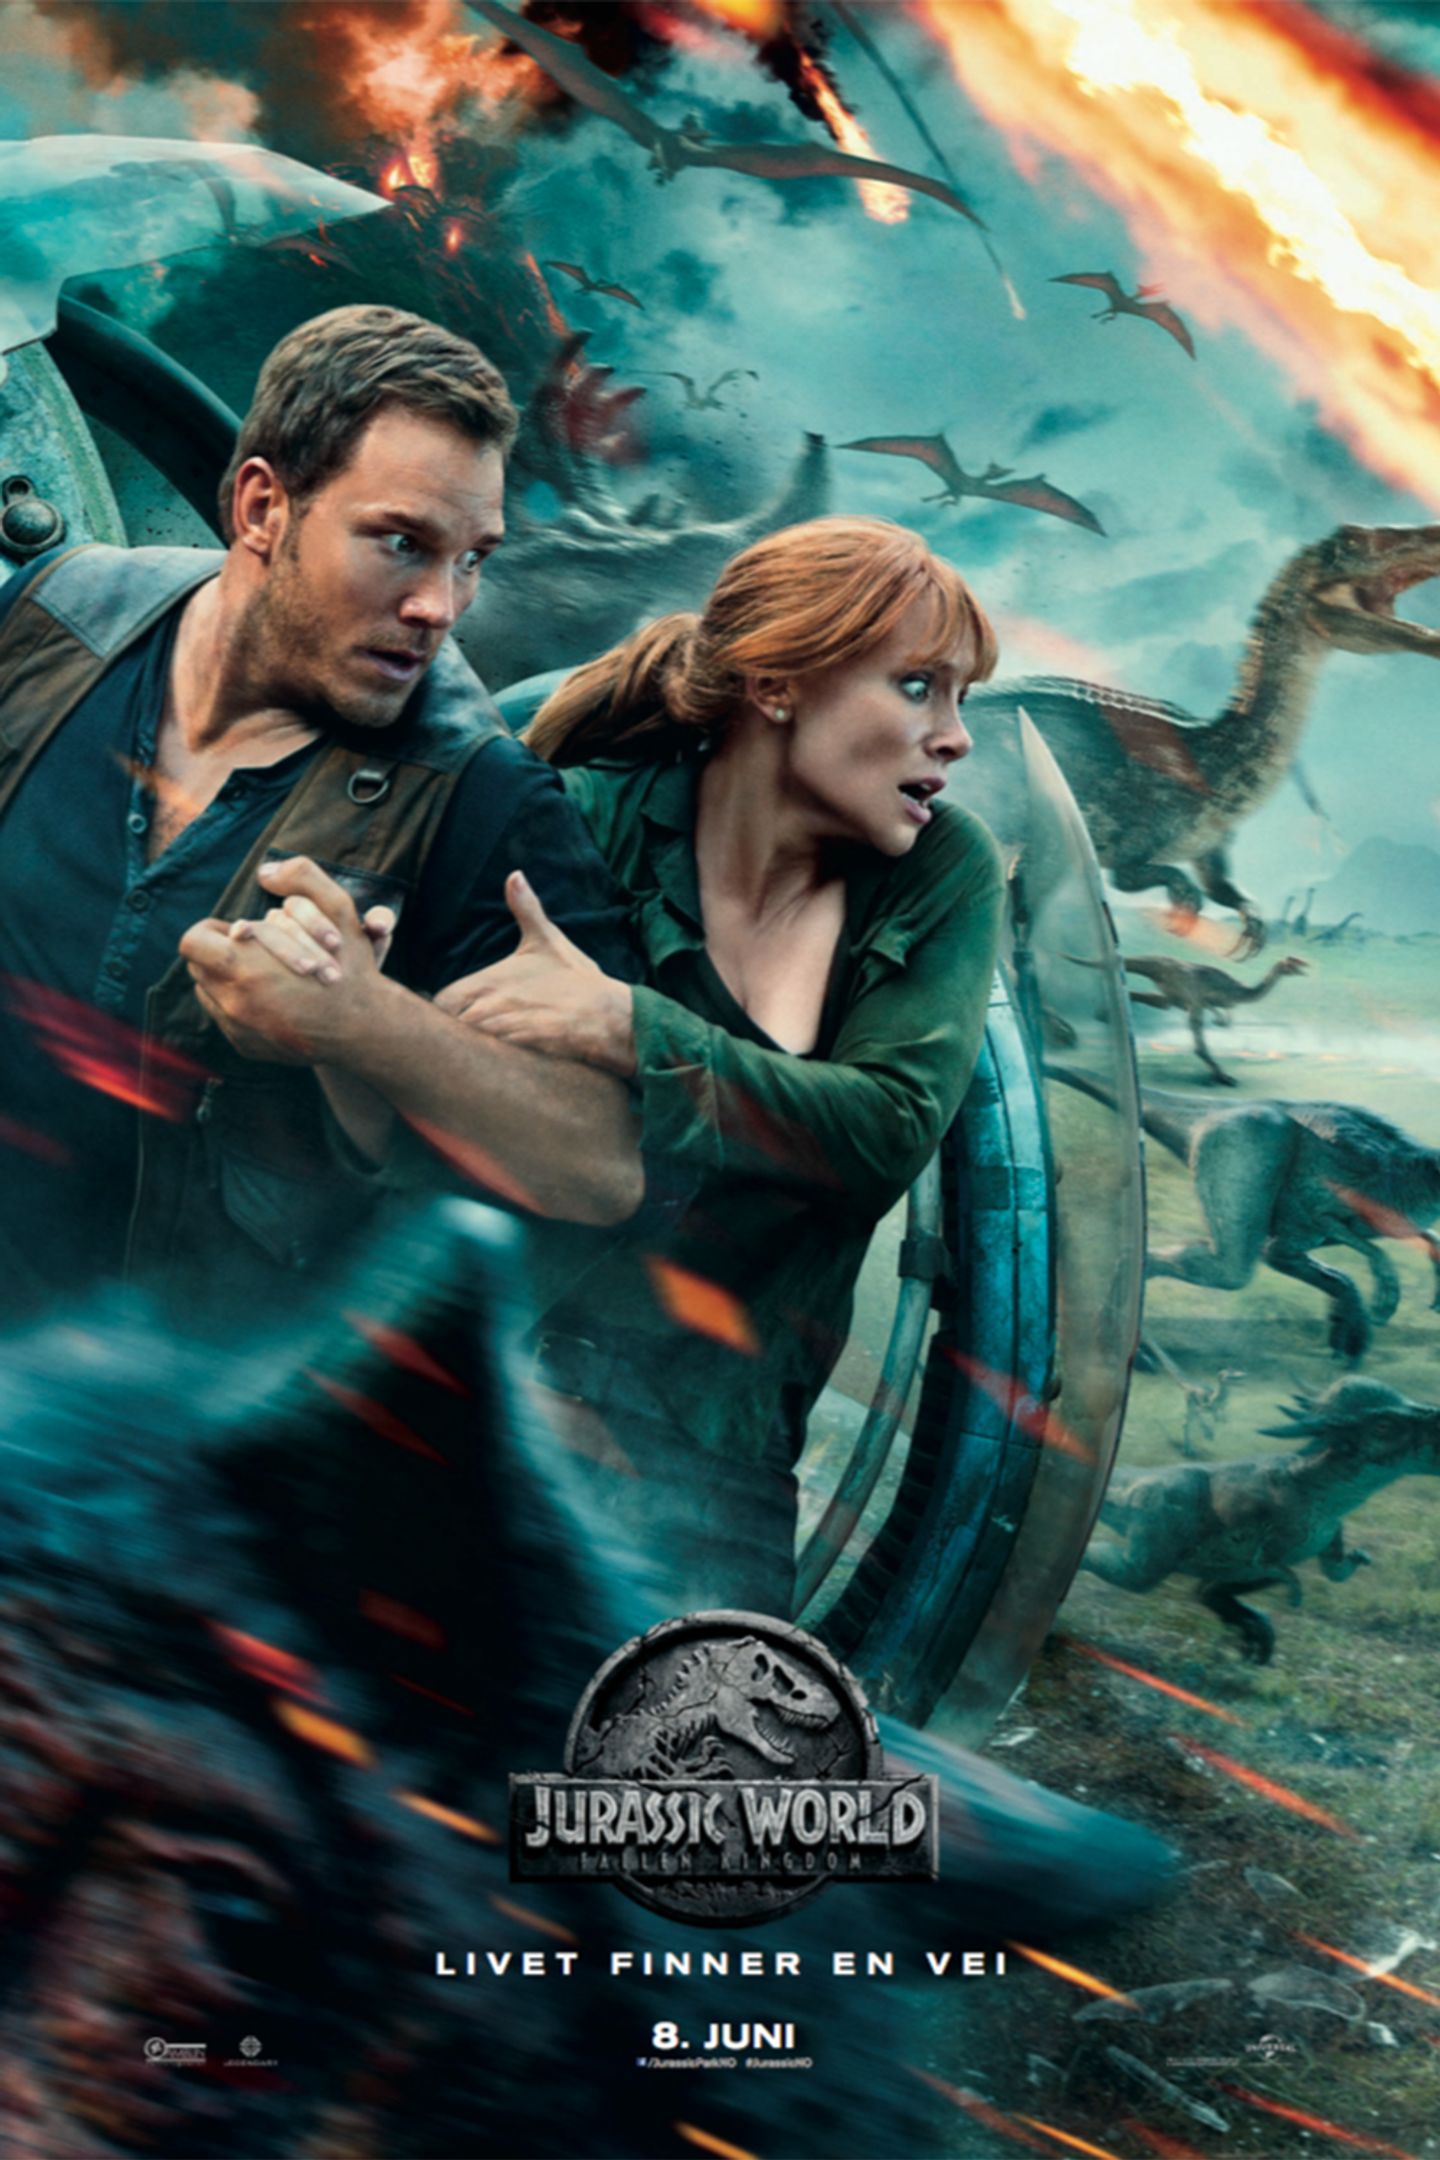 Plakat for 'Jurassic World: Fallen Kingdom'